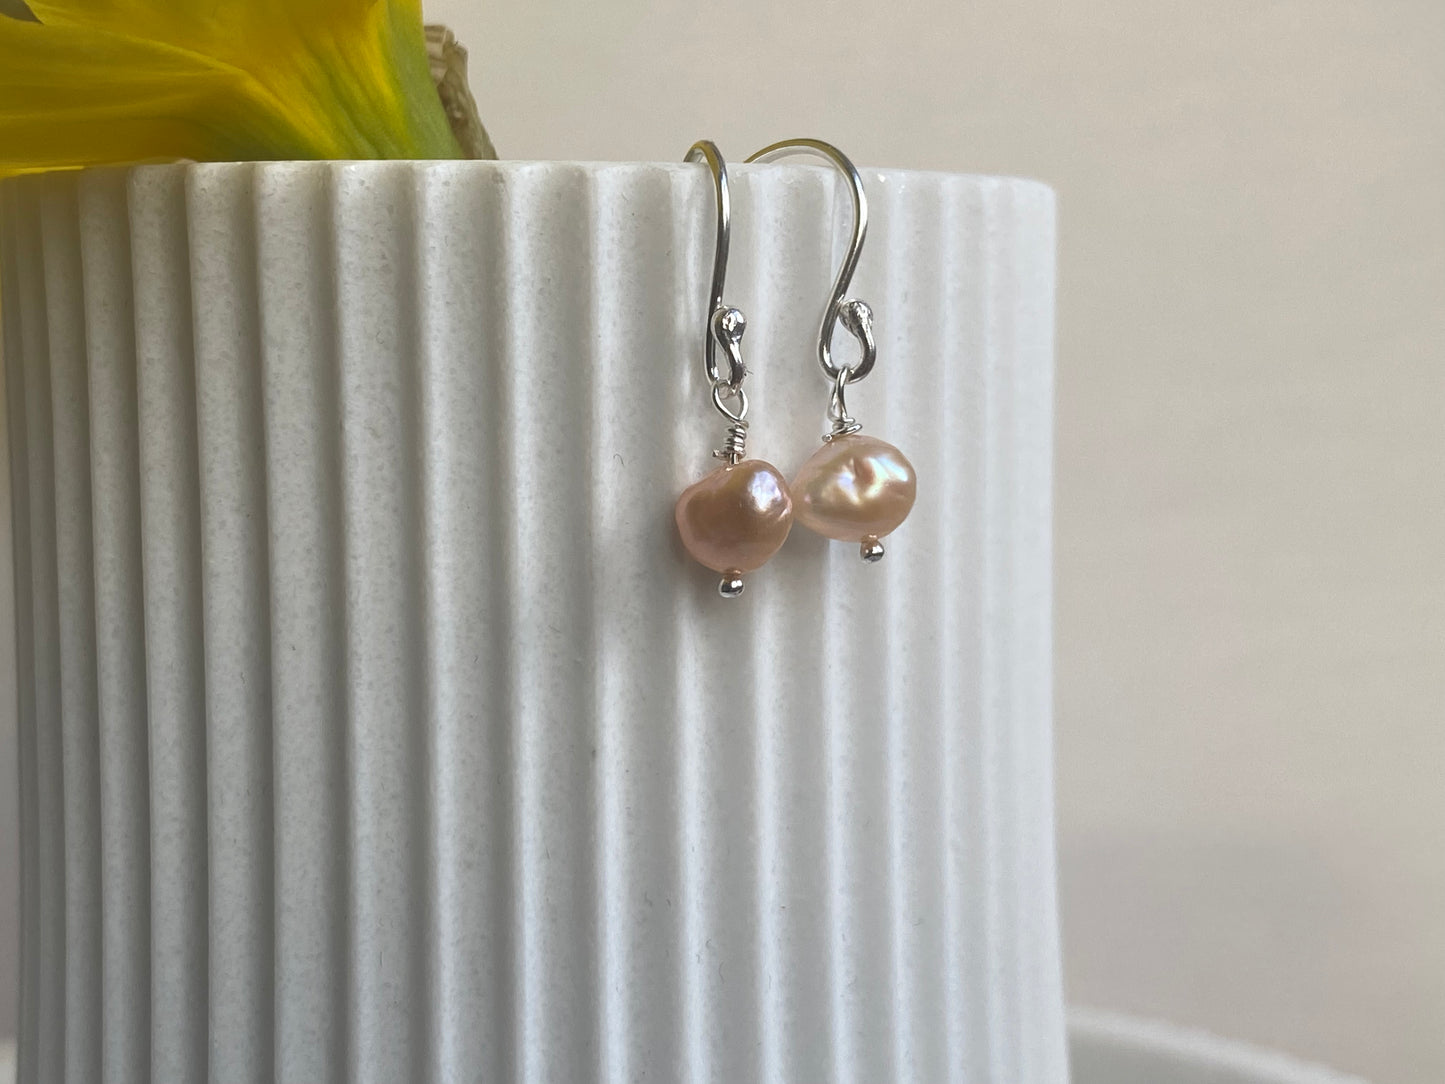 Peach Pearl earrings